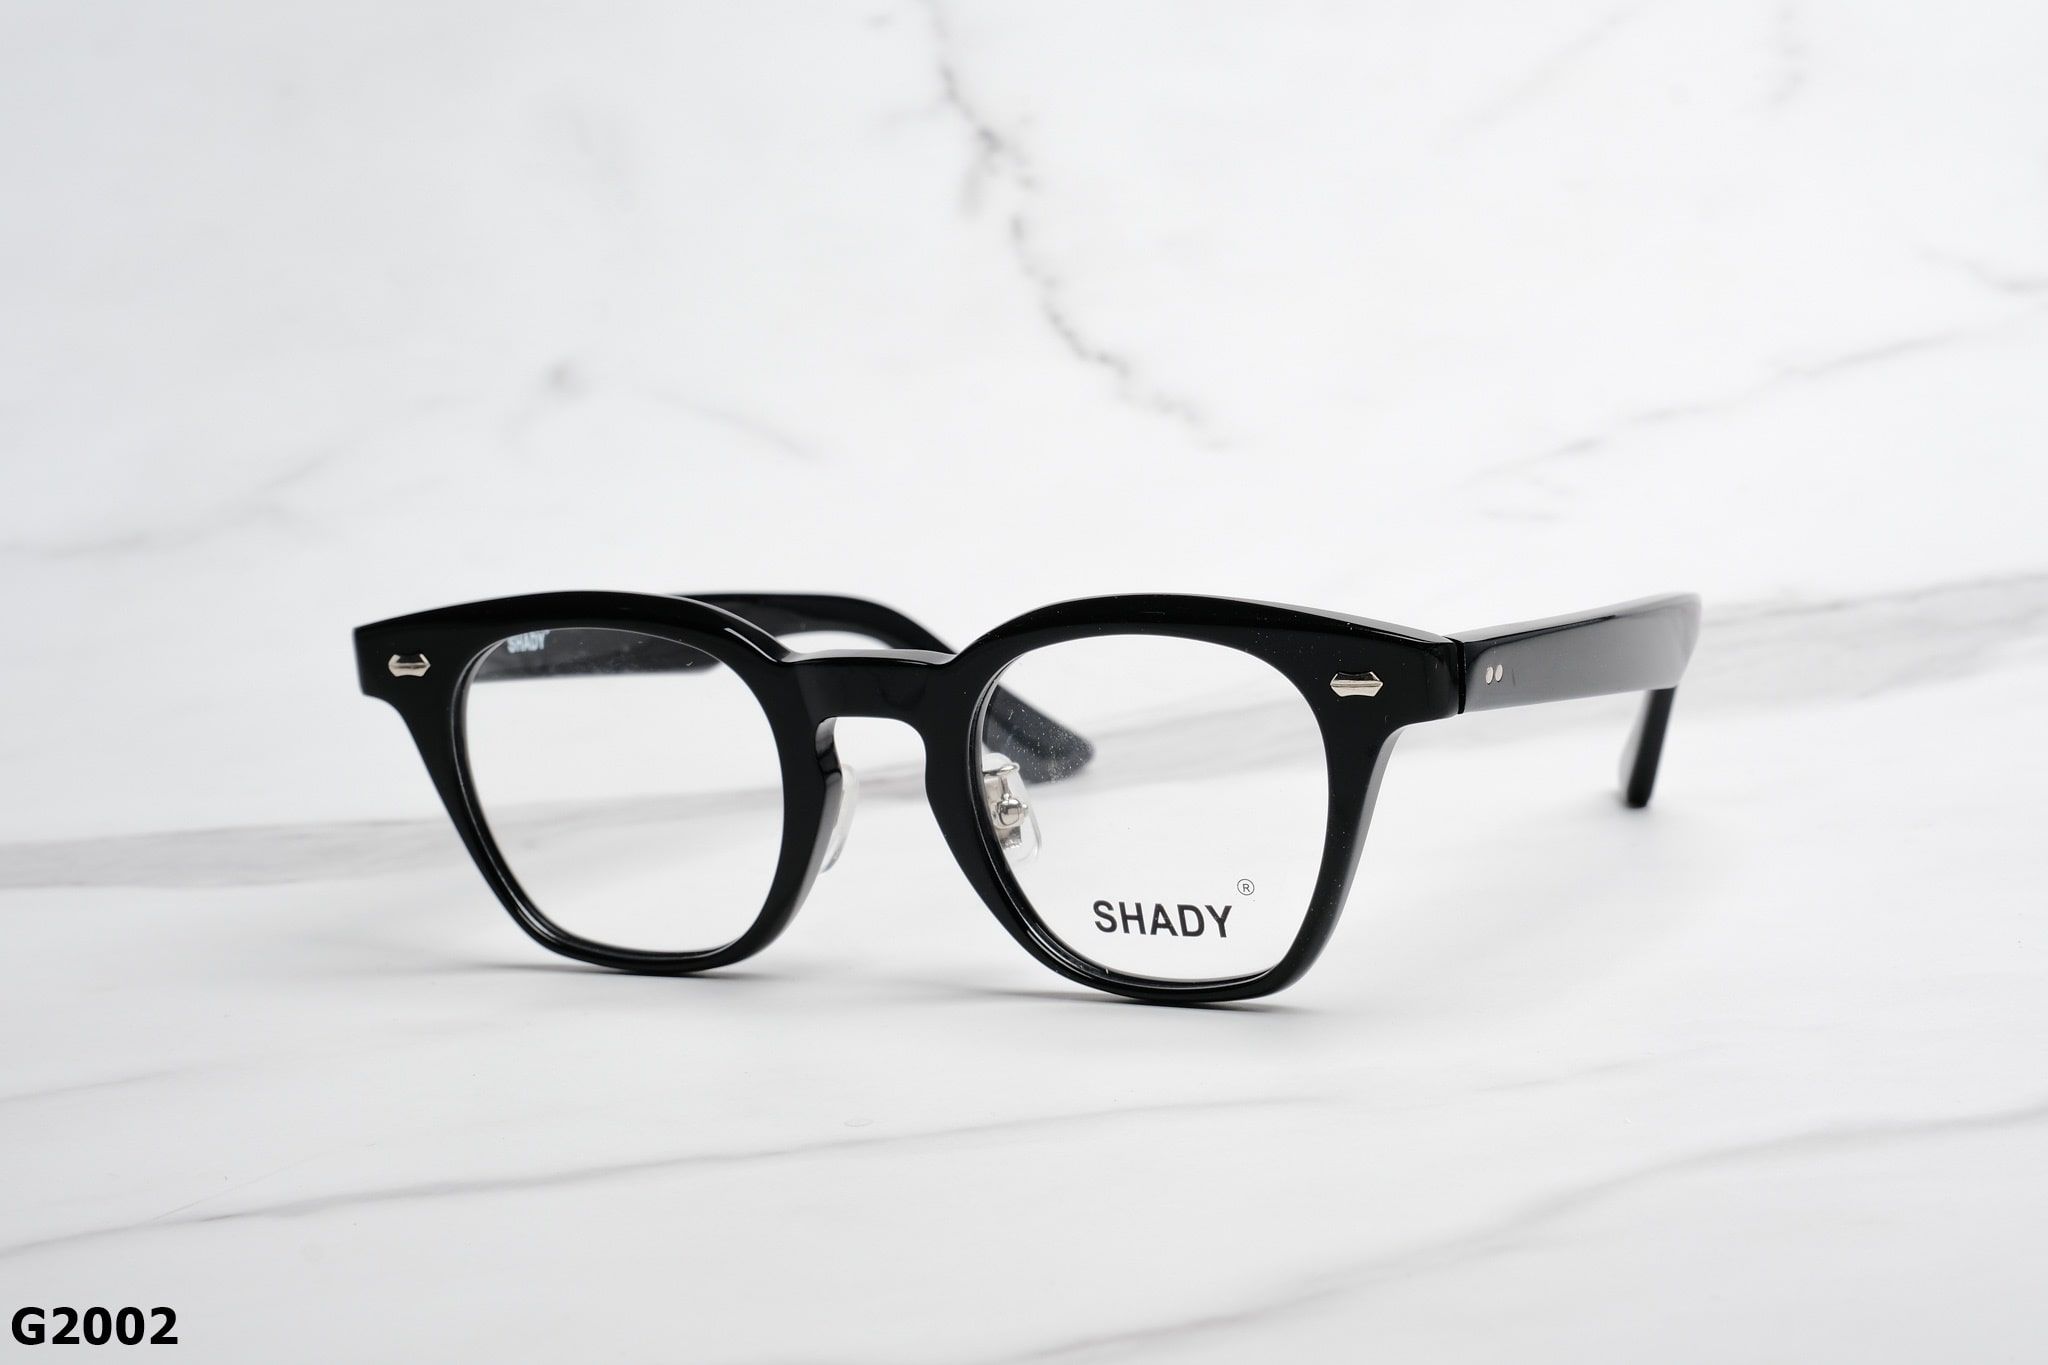  SHADY Eyewear - Glasses - G2002 